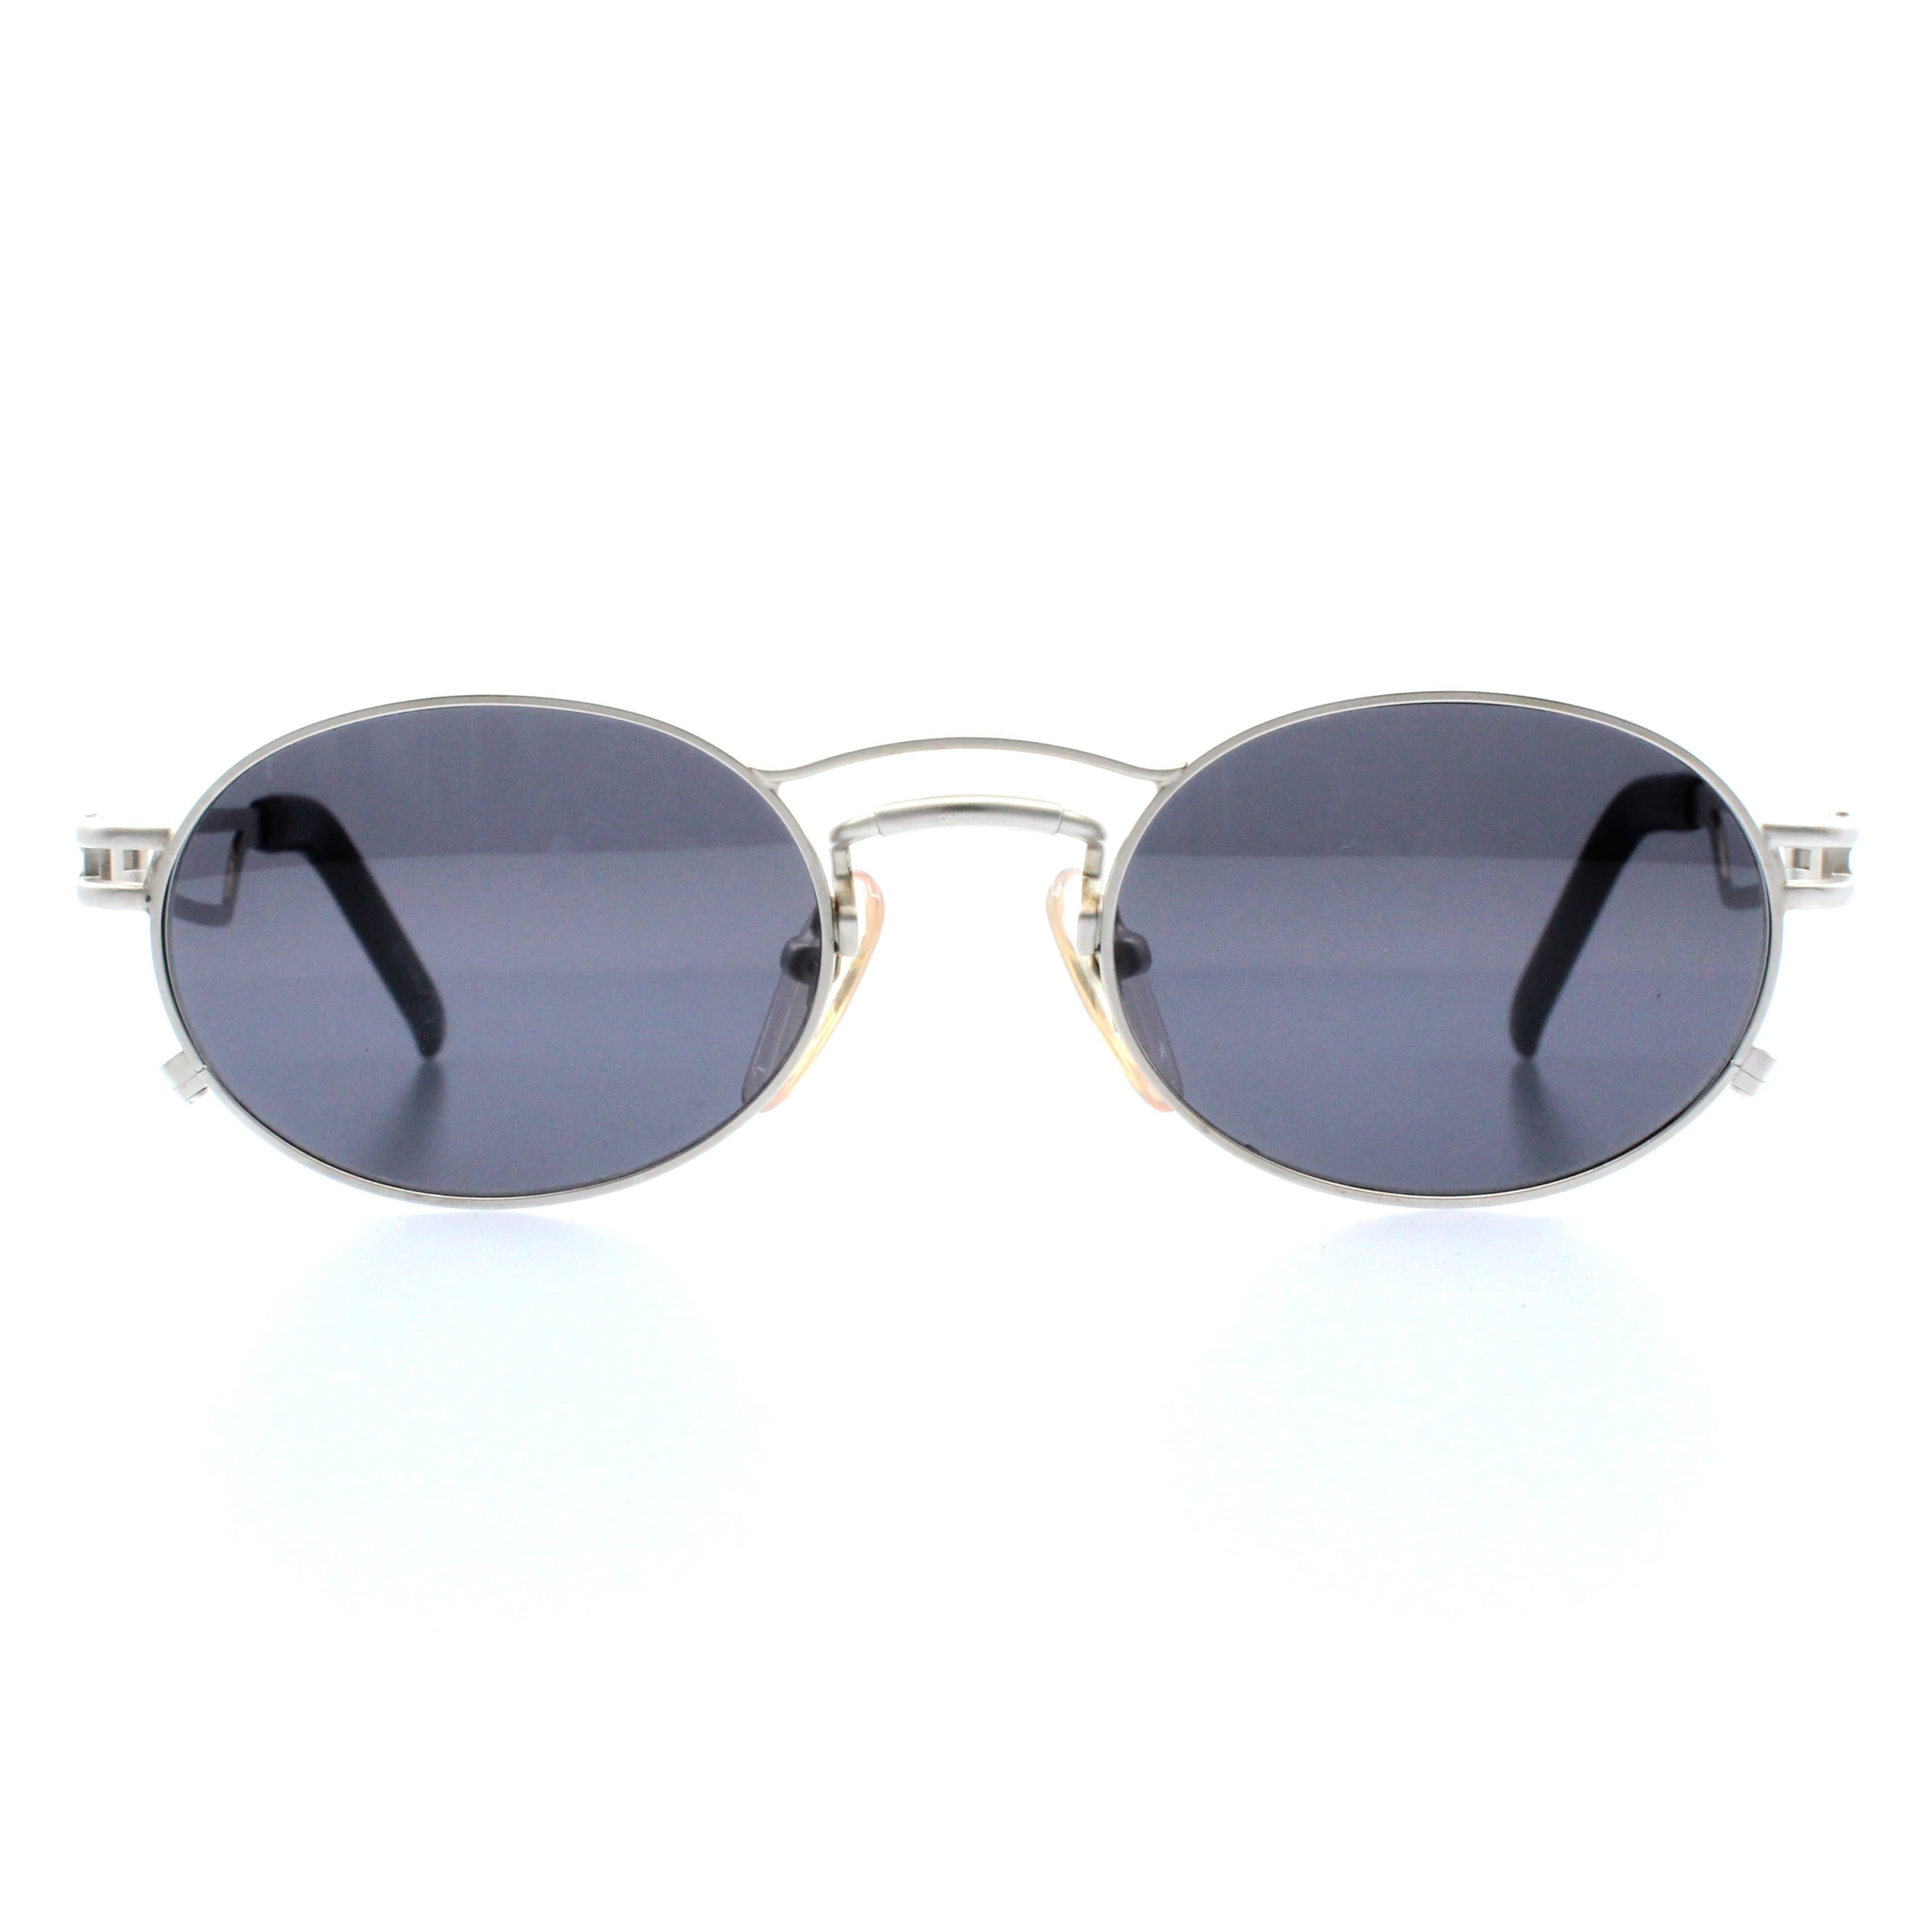 Vintage Jean Paul Gaultier 56-3173 Sunglasses